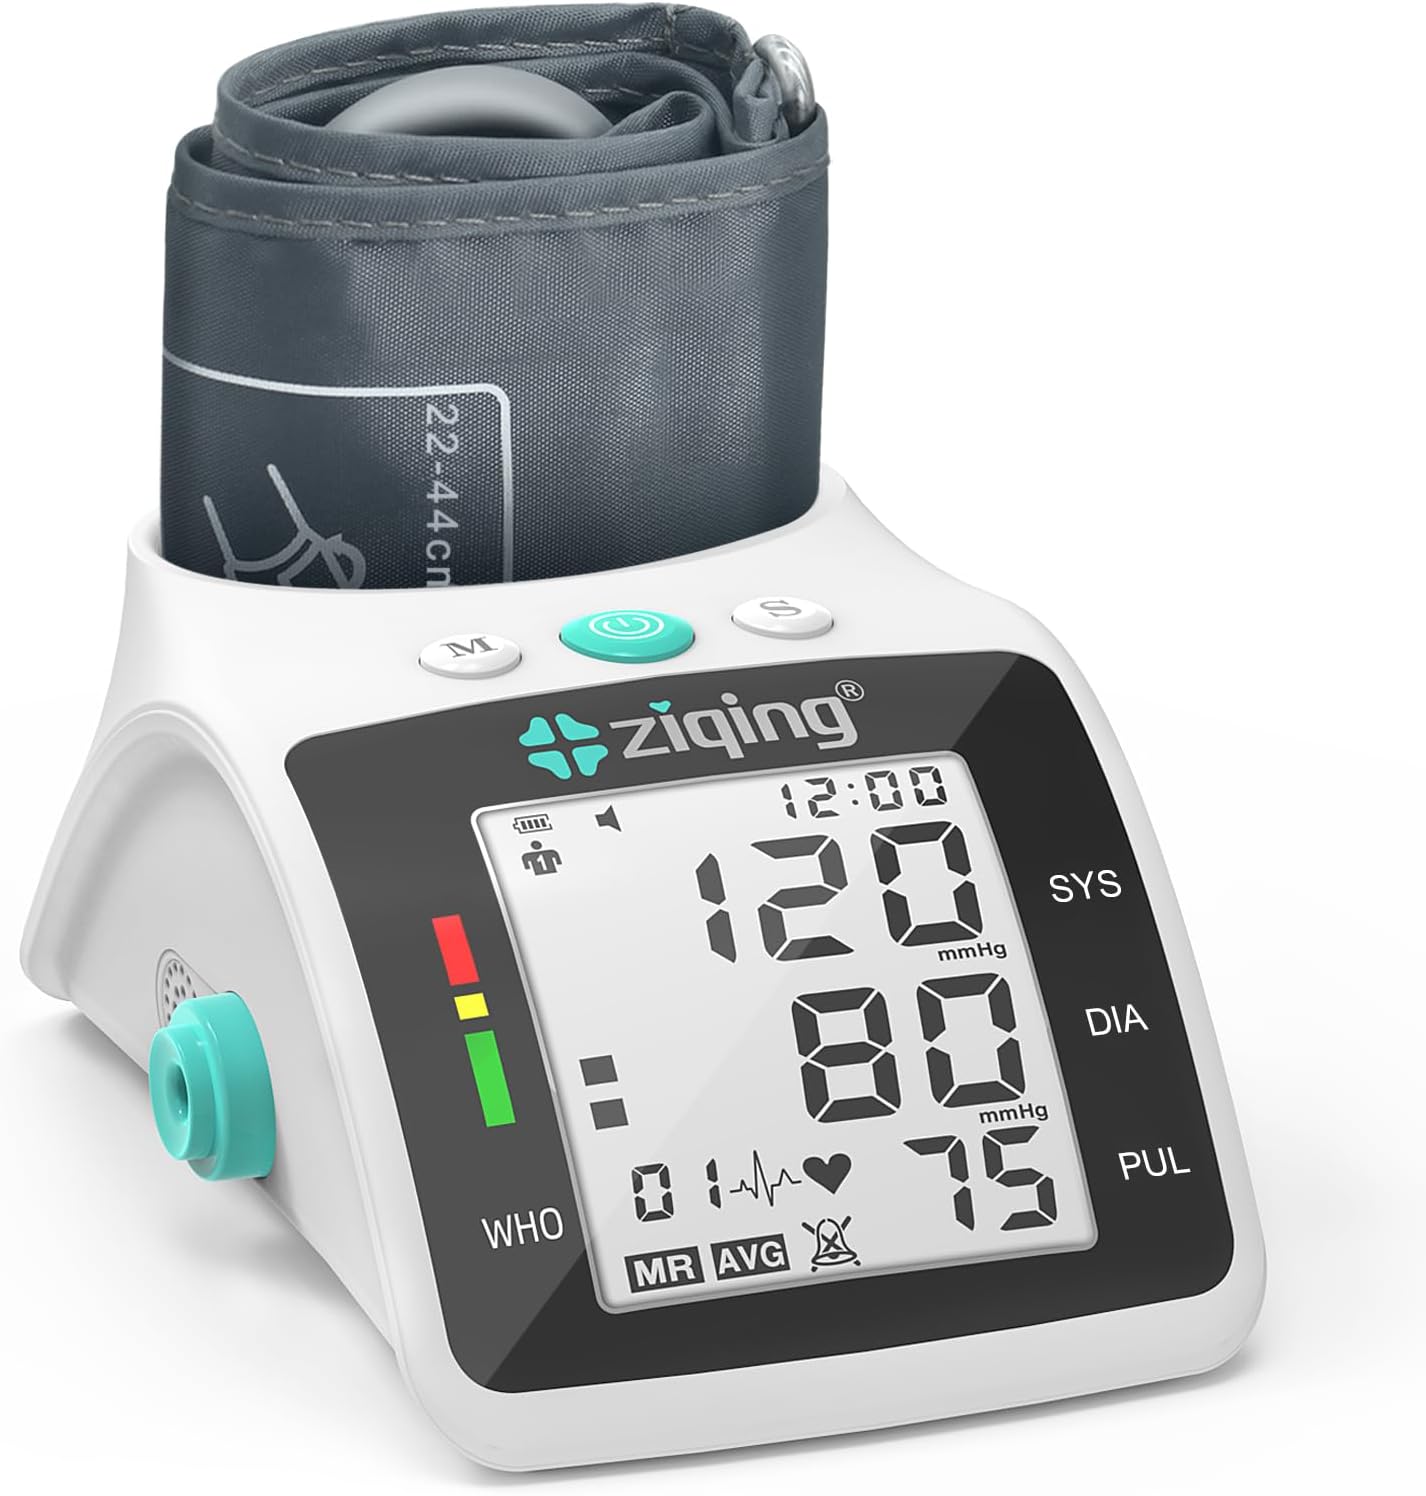 Aspen Quick Start Guide for Meraw Blood Pressure Monitor